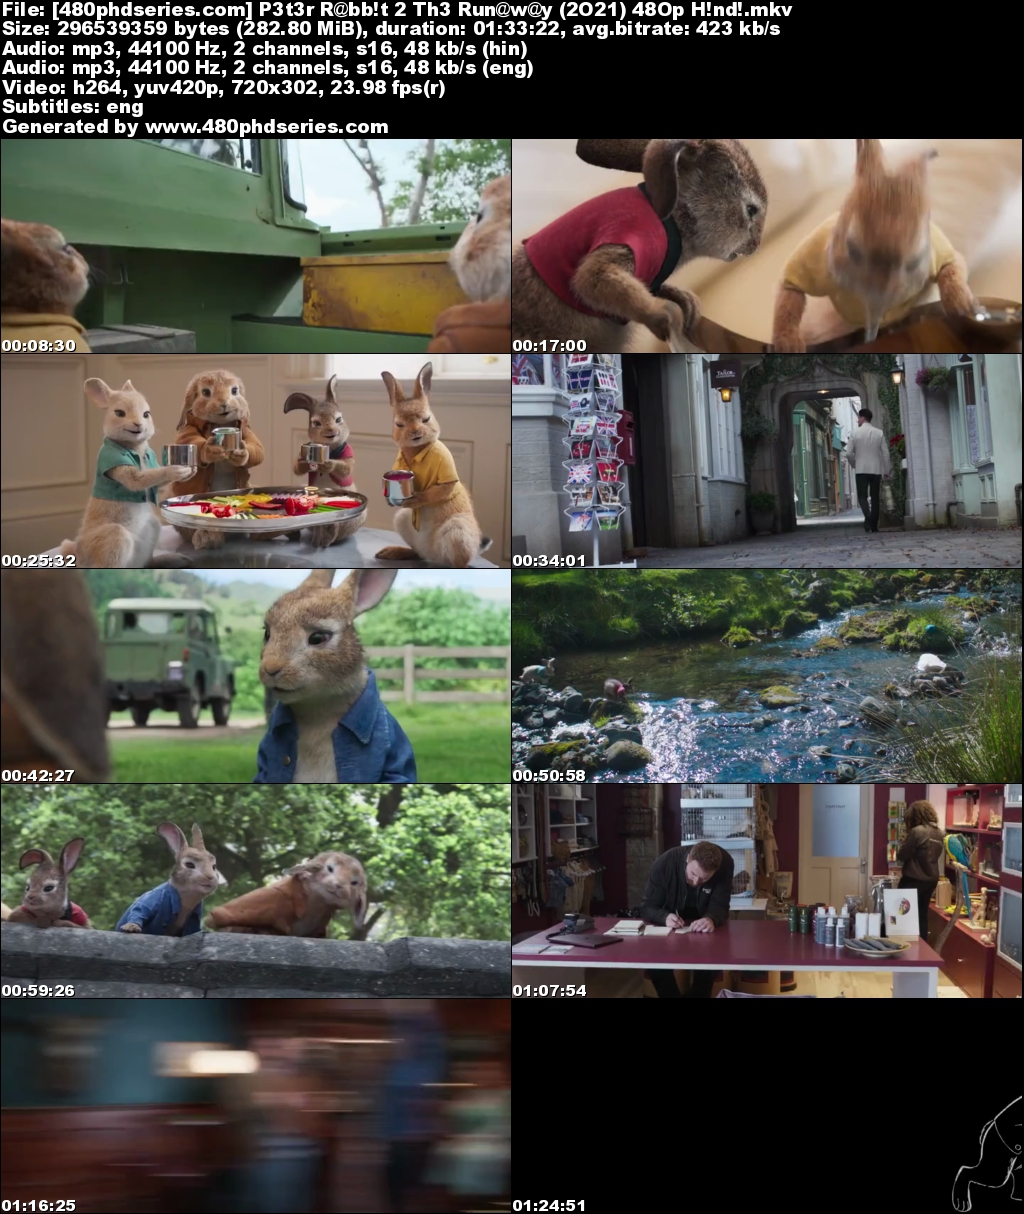 Peter Rabbit 2 (2021) 300MB Full Hindi Dual Audio Movie Download 480p Bluray Free Watch Online Full Movie Download Worldfree4u 9xmovies